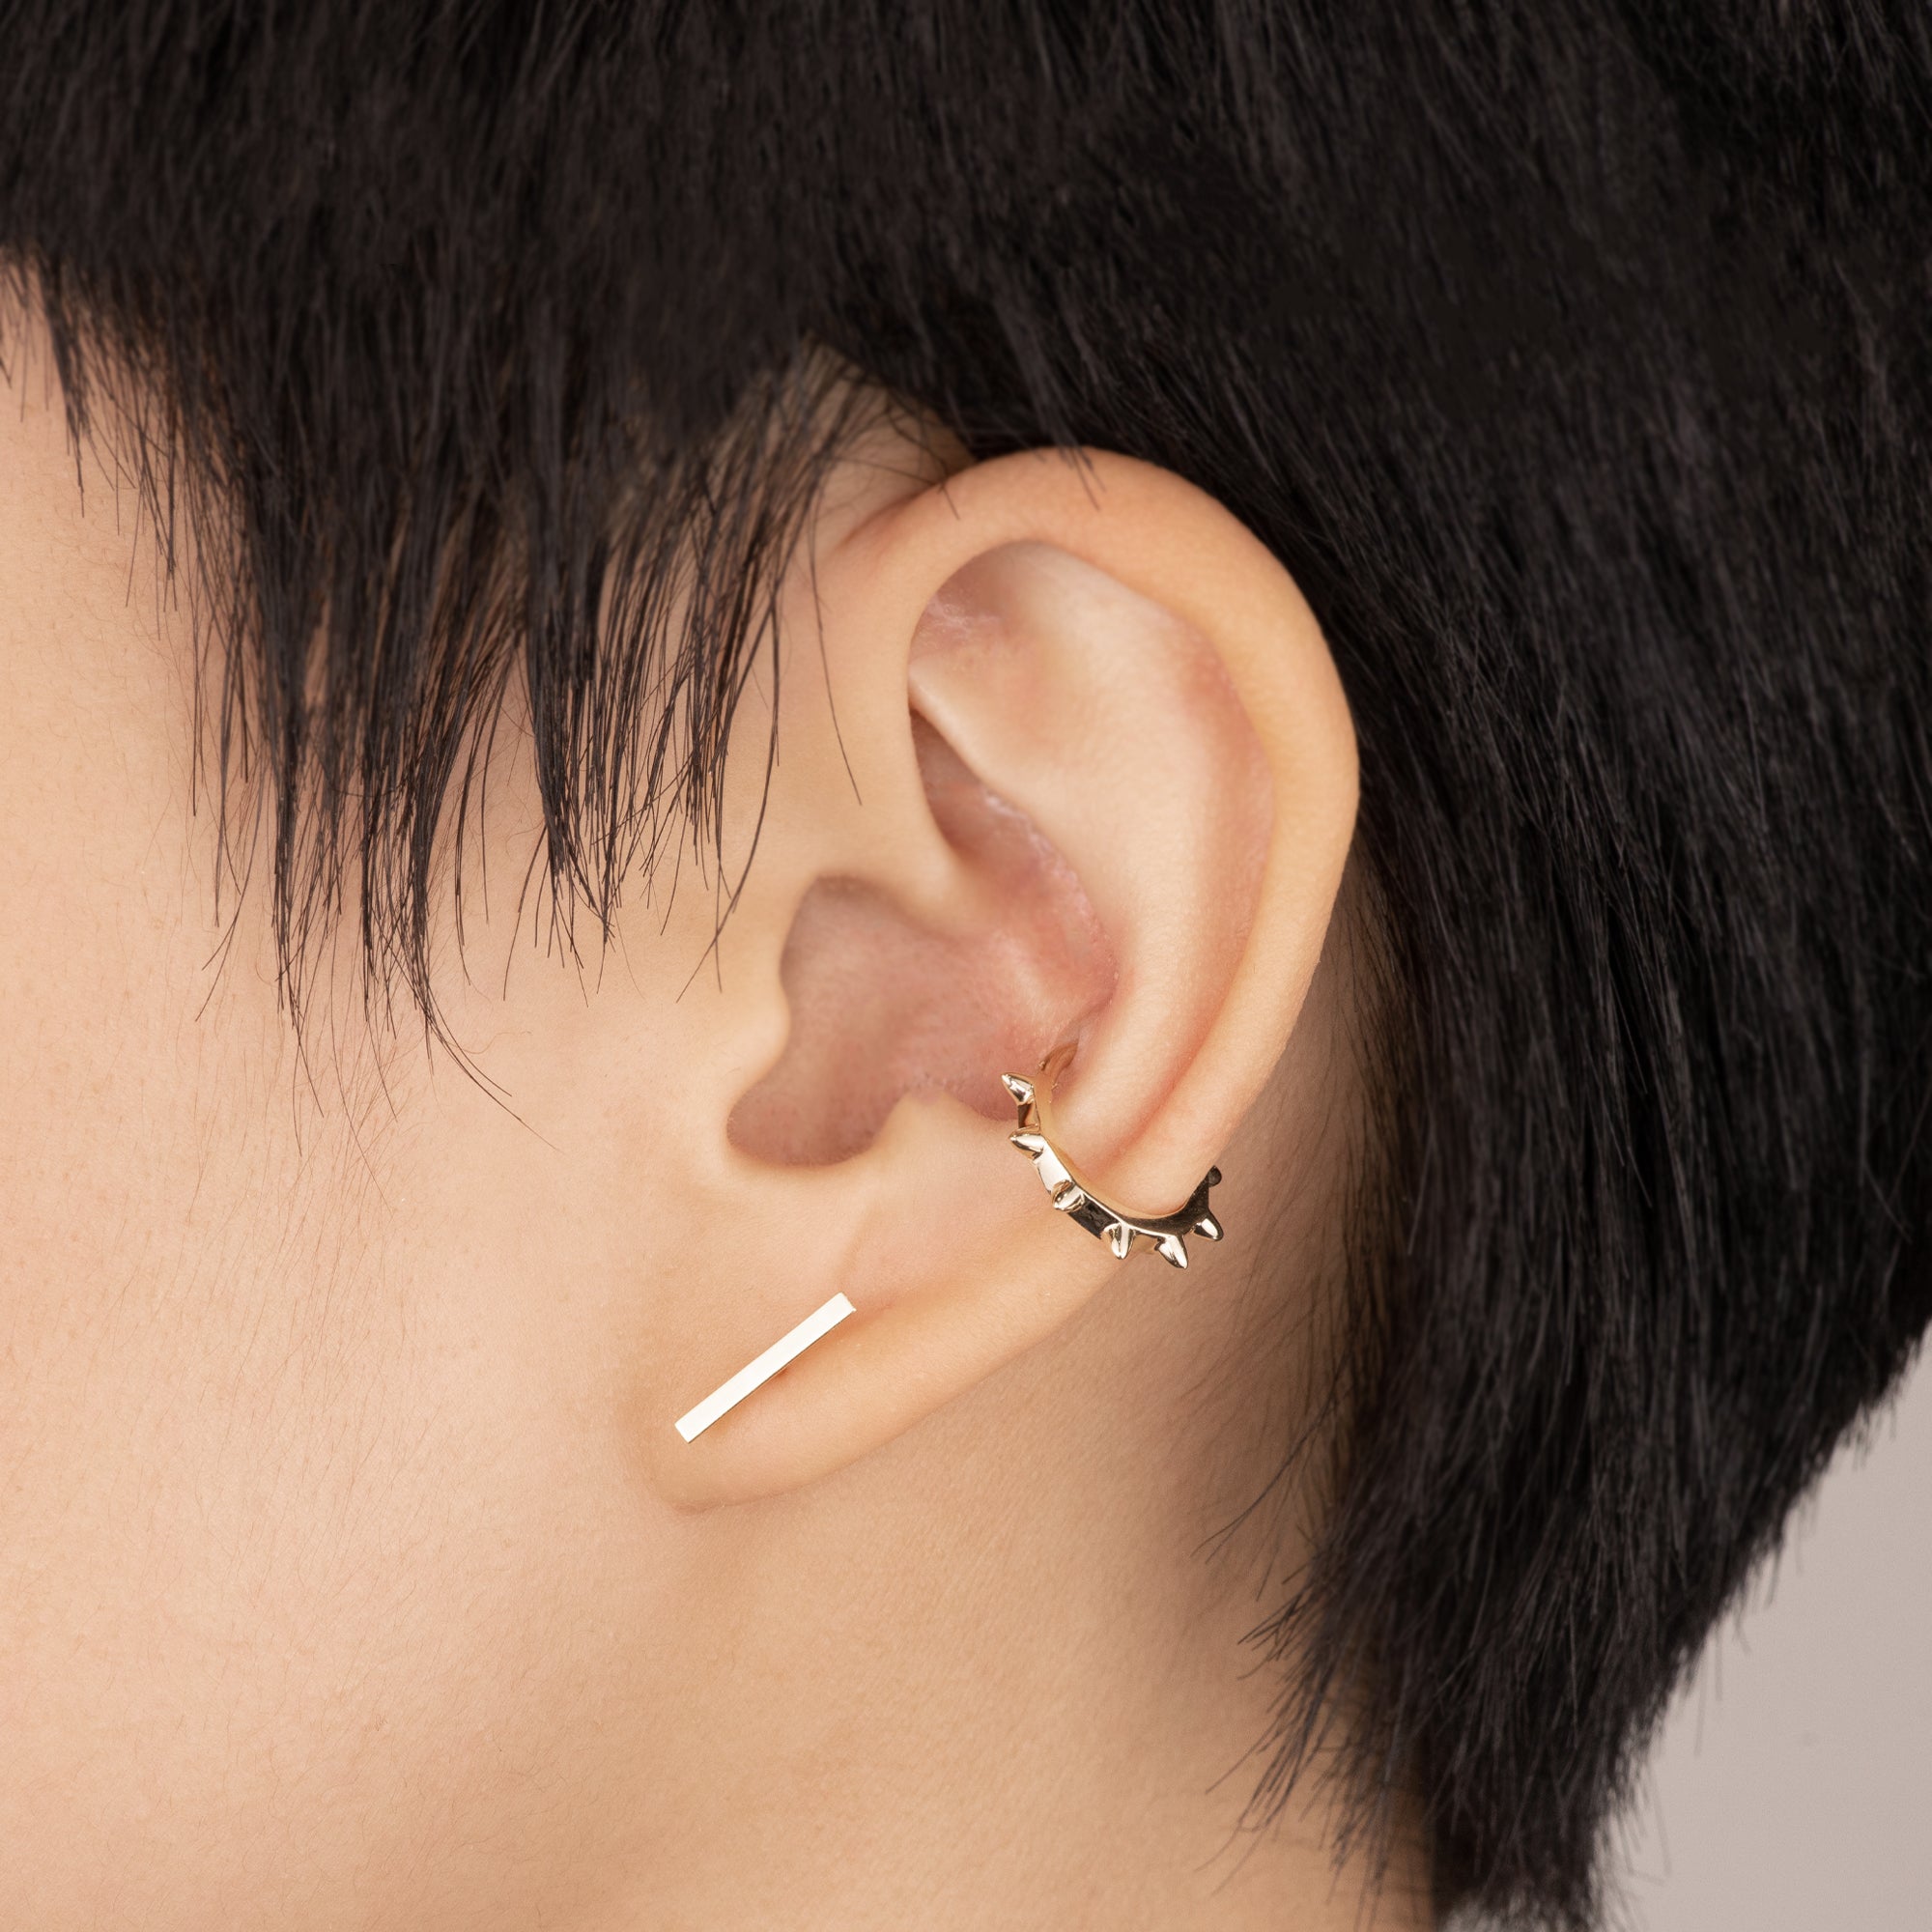 14K Solid Gold Spike Clicker Hoop Piercing Ear & Septum - Anygolds 